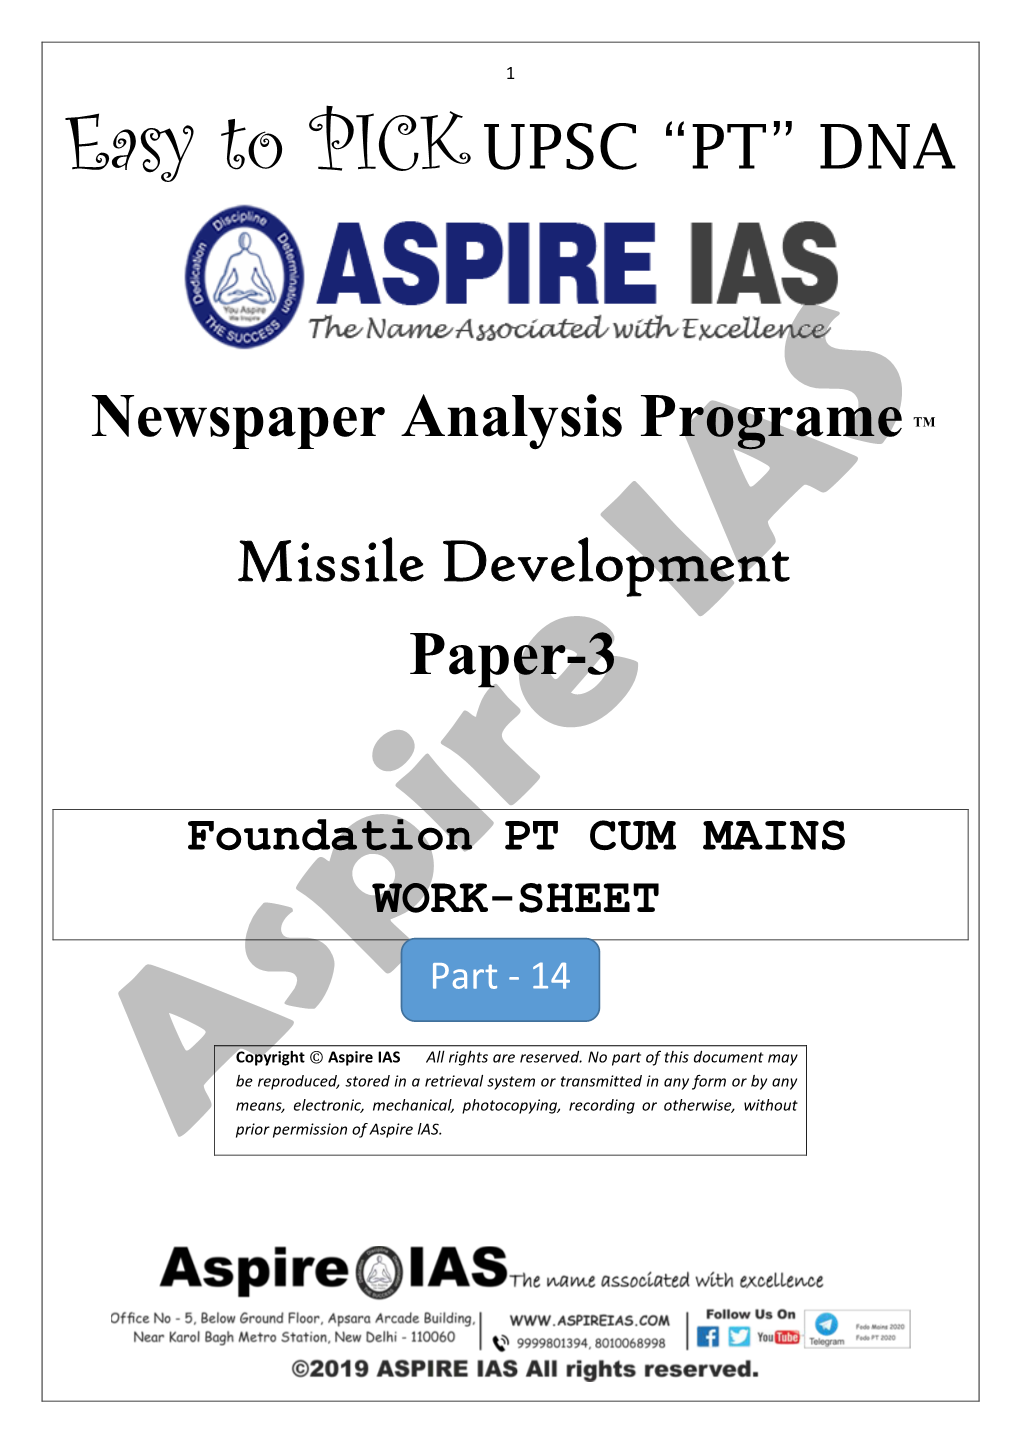 DNA Newspaper Analysis Programetm Missile Development